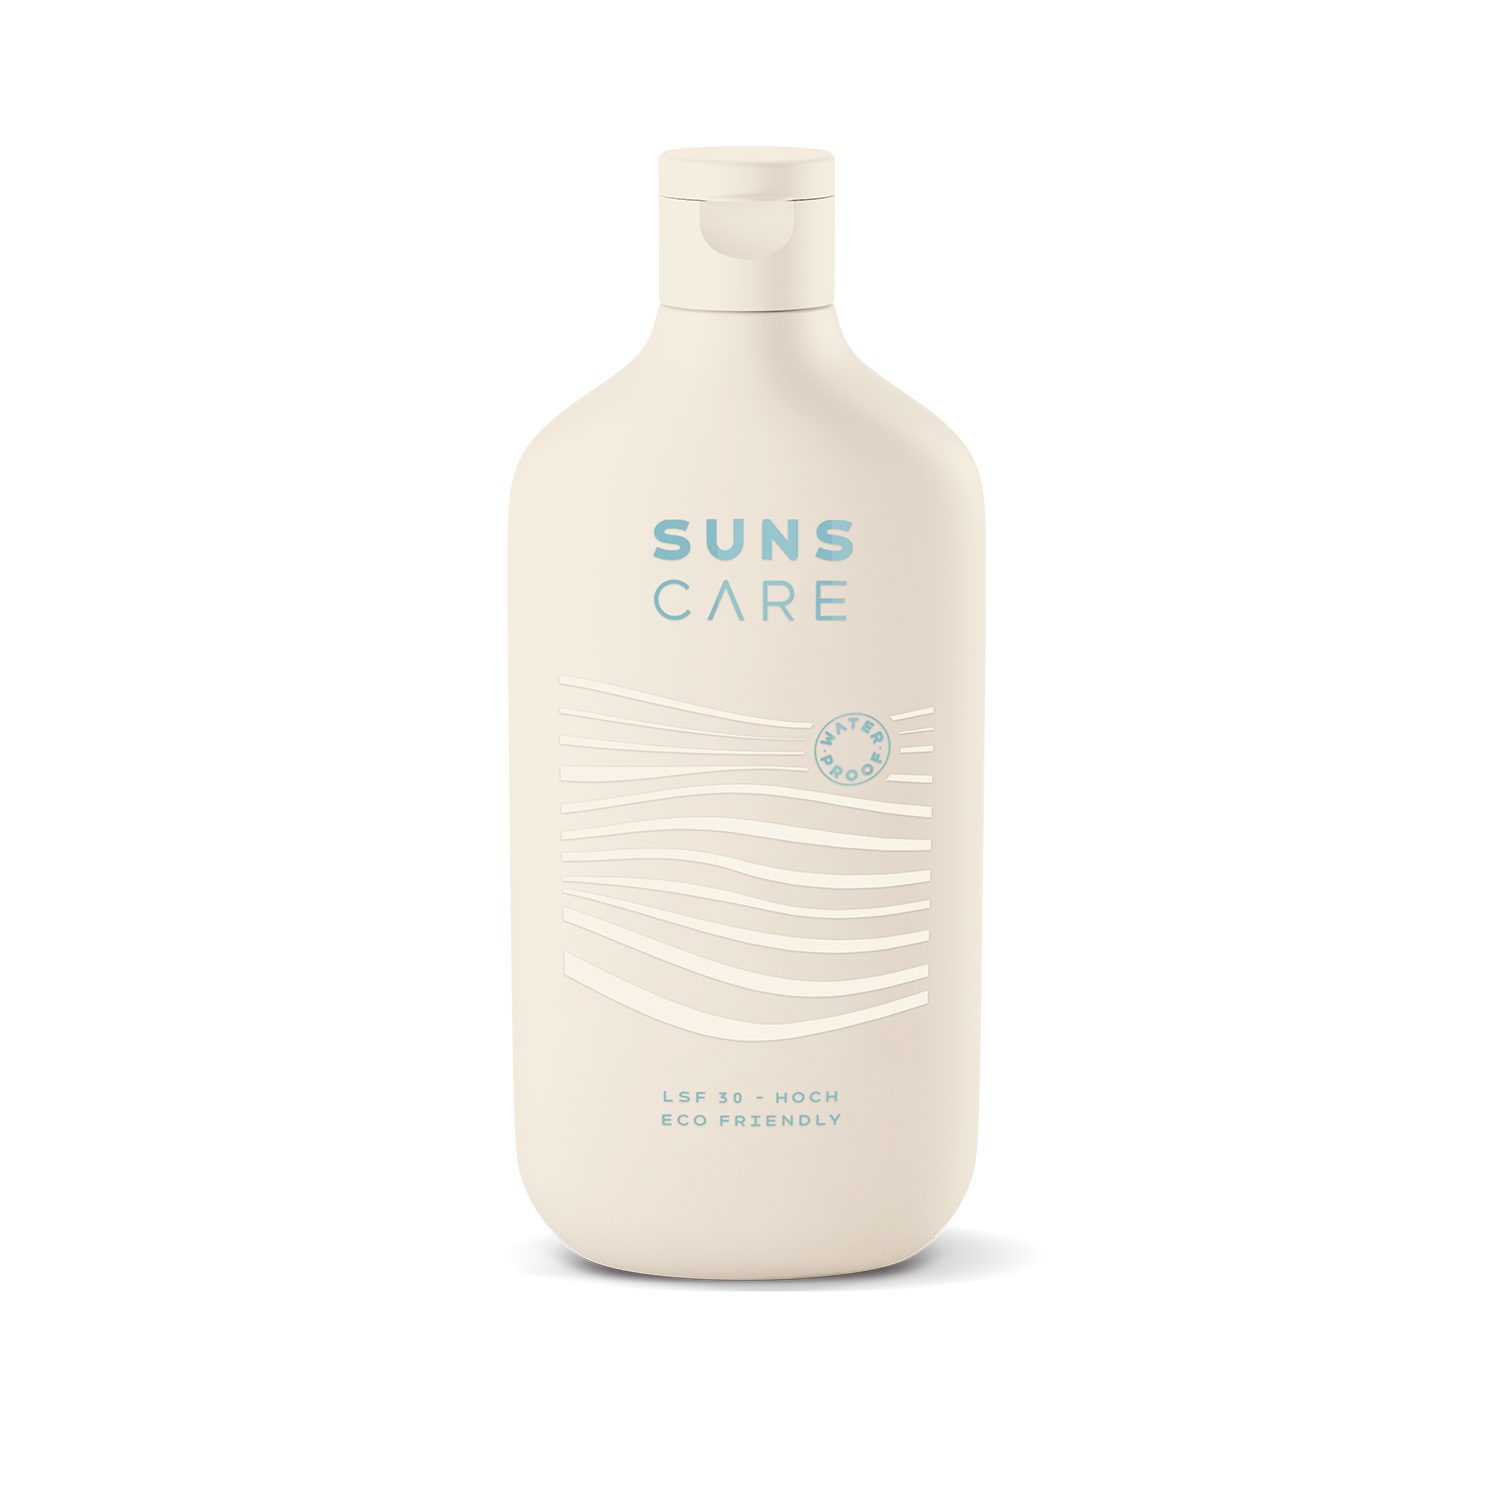 SUNS CARE Sonnenschutzlotion Waterproof LSF30, 180ml, vegan und reef-friendly